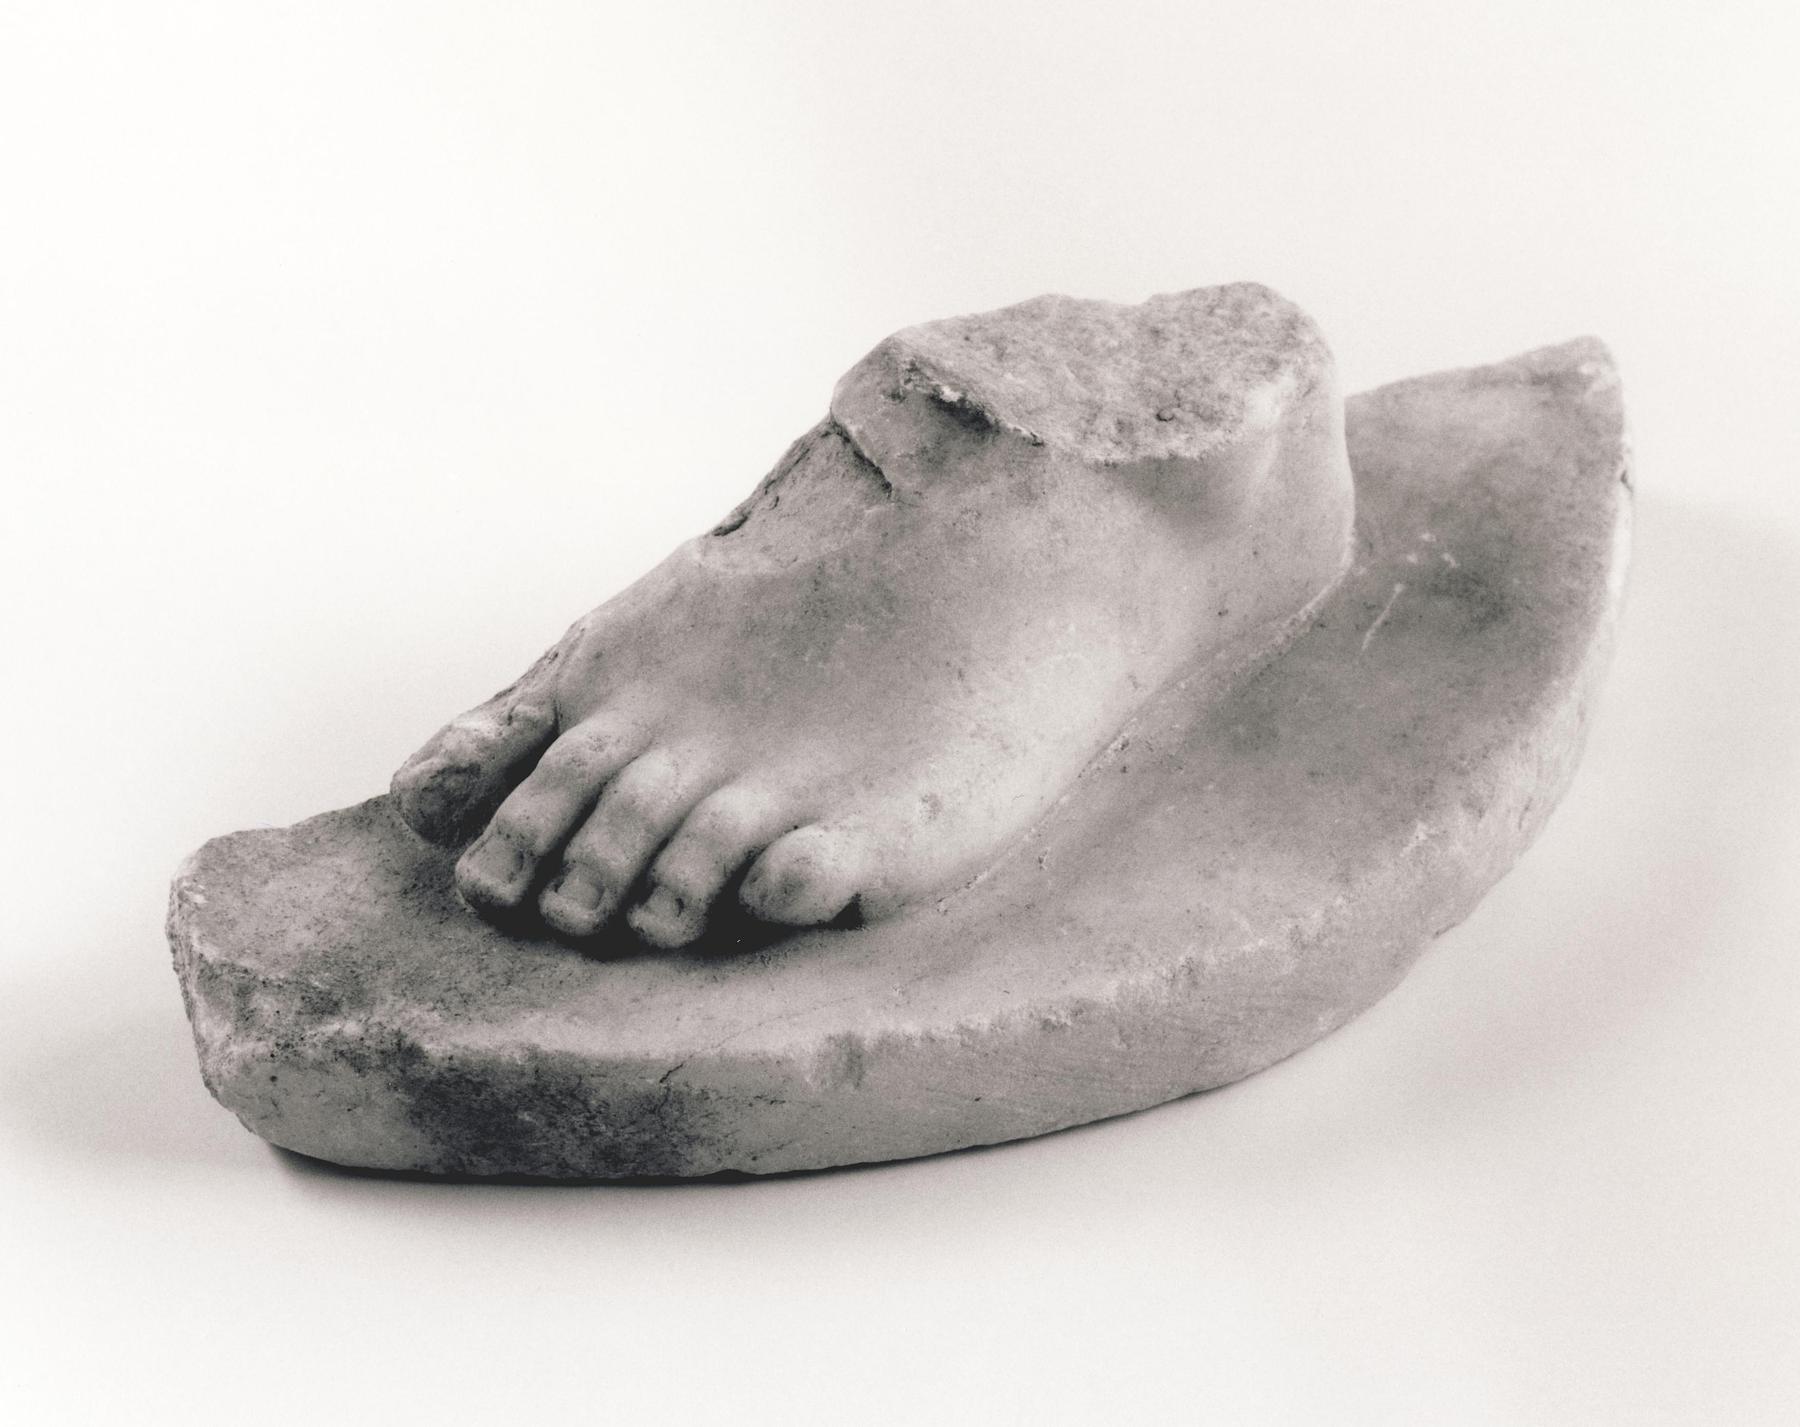 Statuette of a human figure, H1461